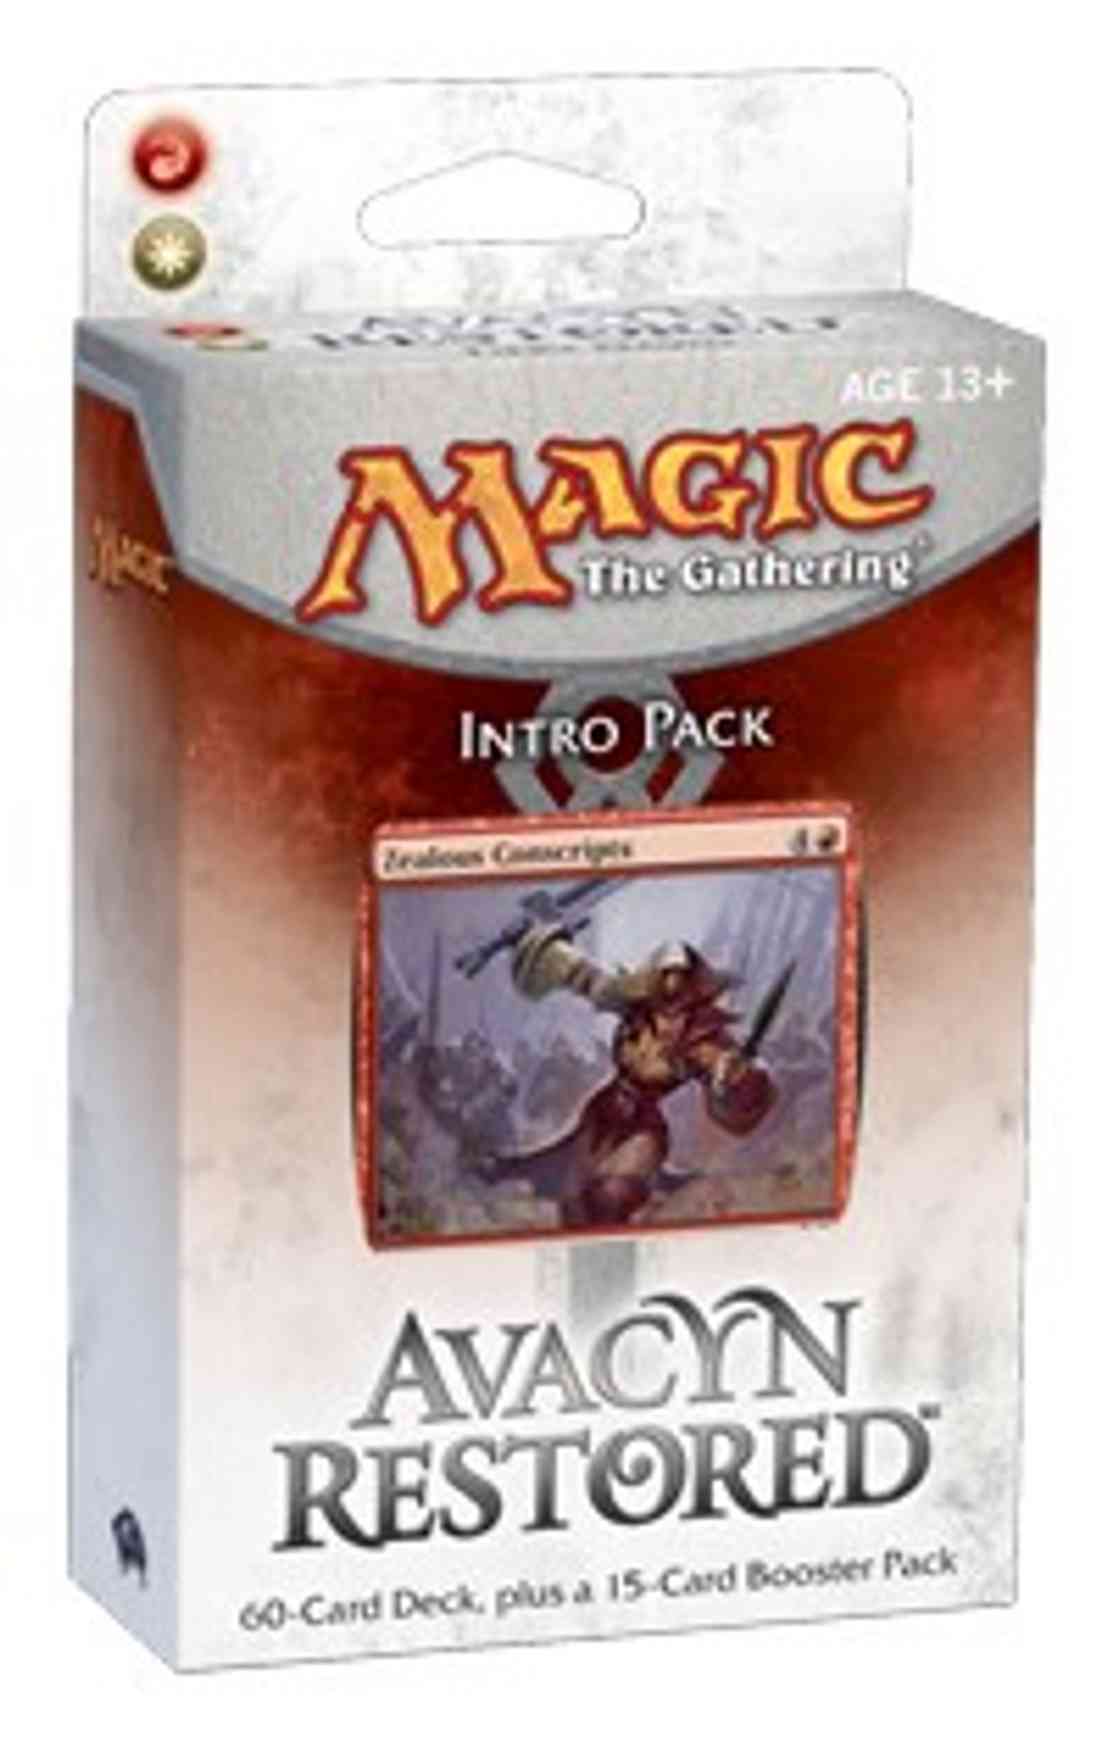 Avacyn Restored - Intro Pack - Fiery Dawn magic card front